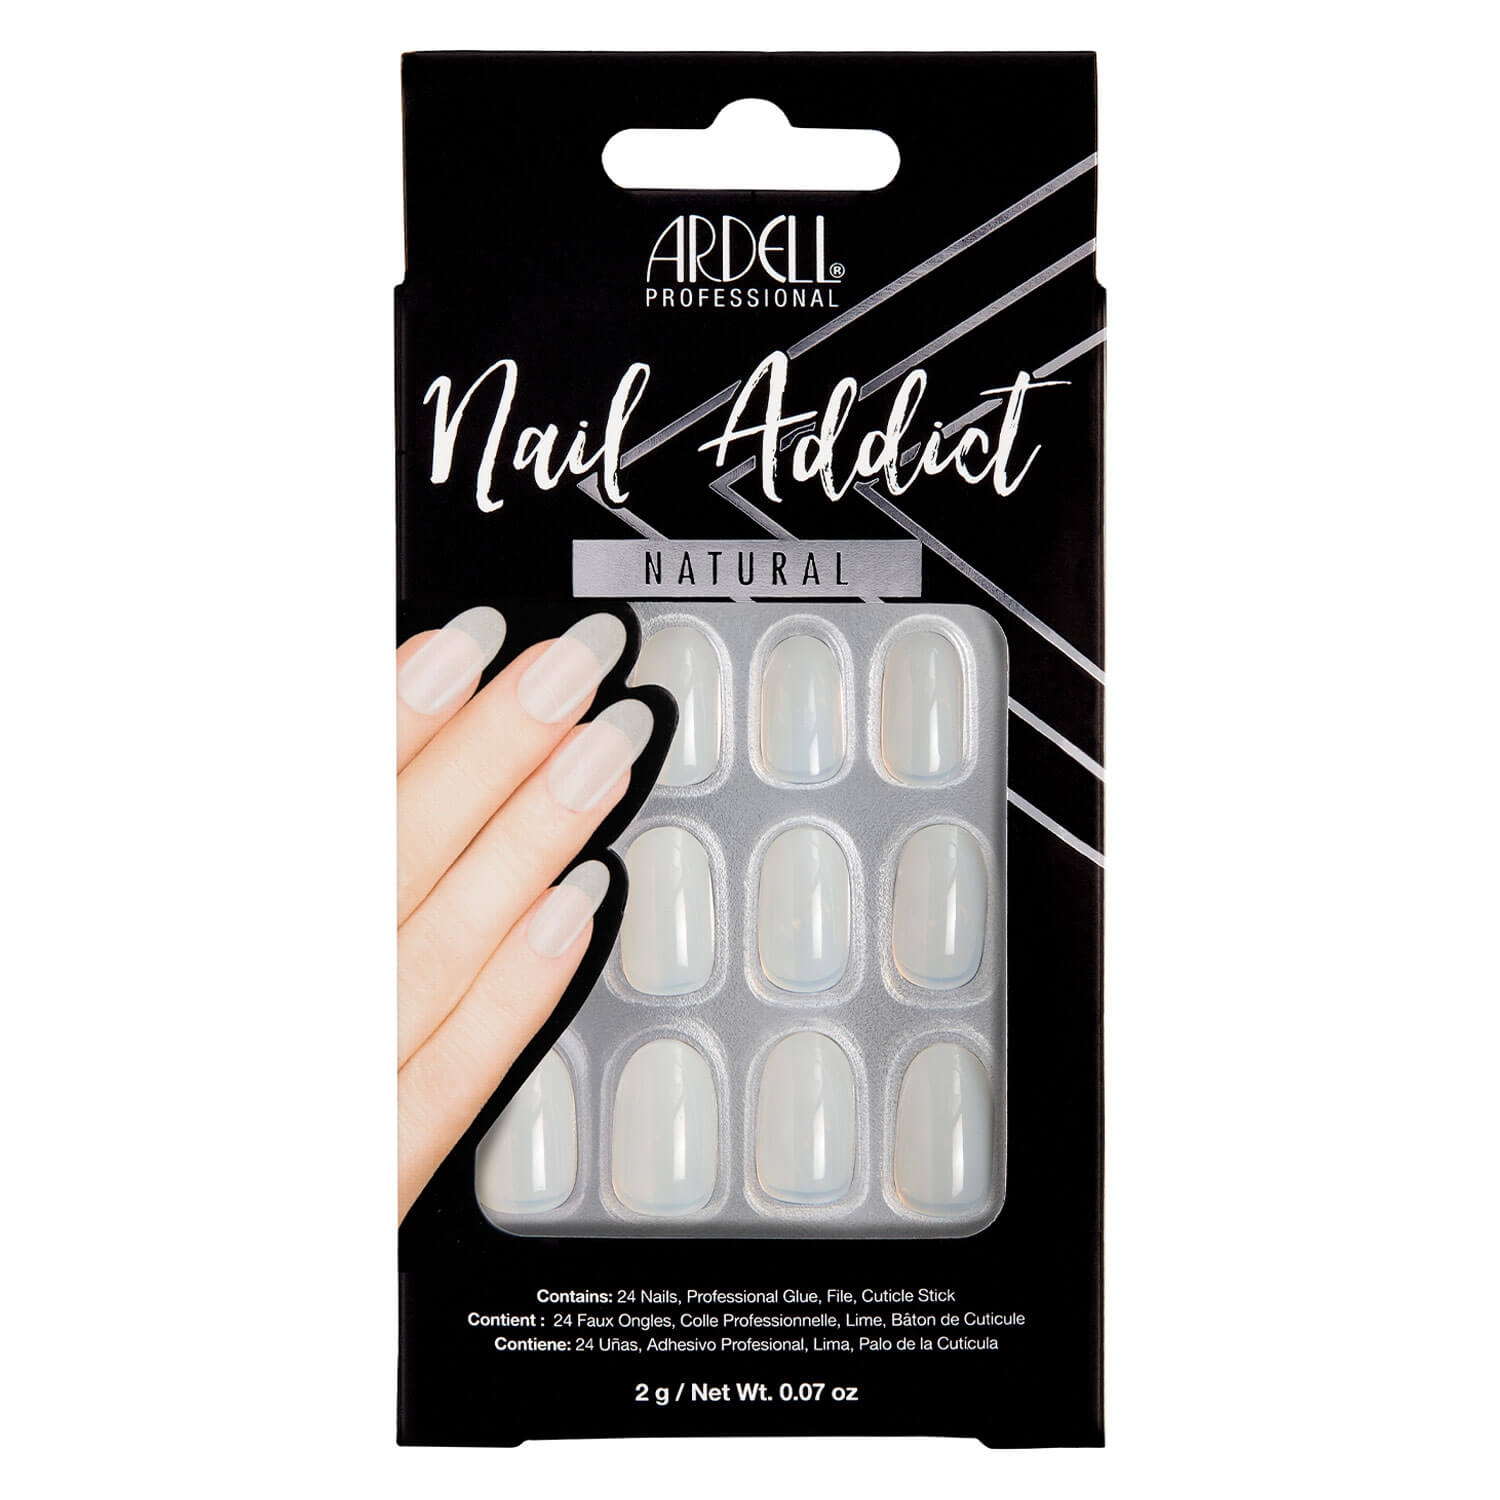 Produktbild von Nail Addict - Nail Addict Natural Oval